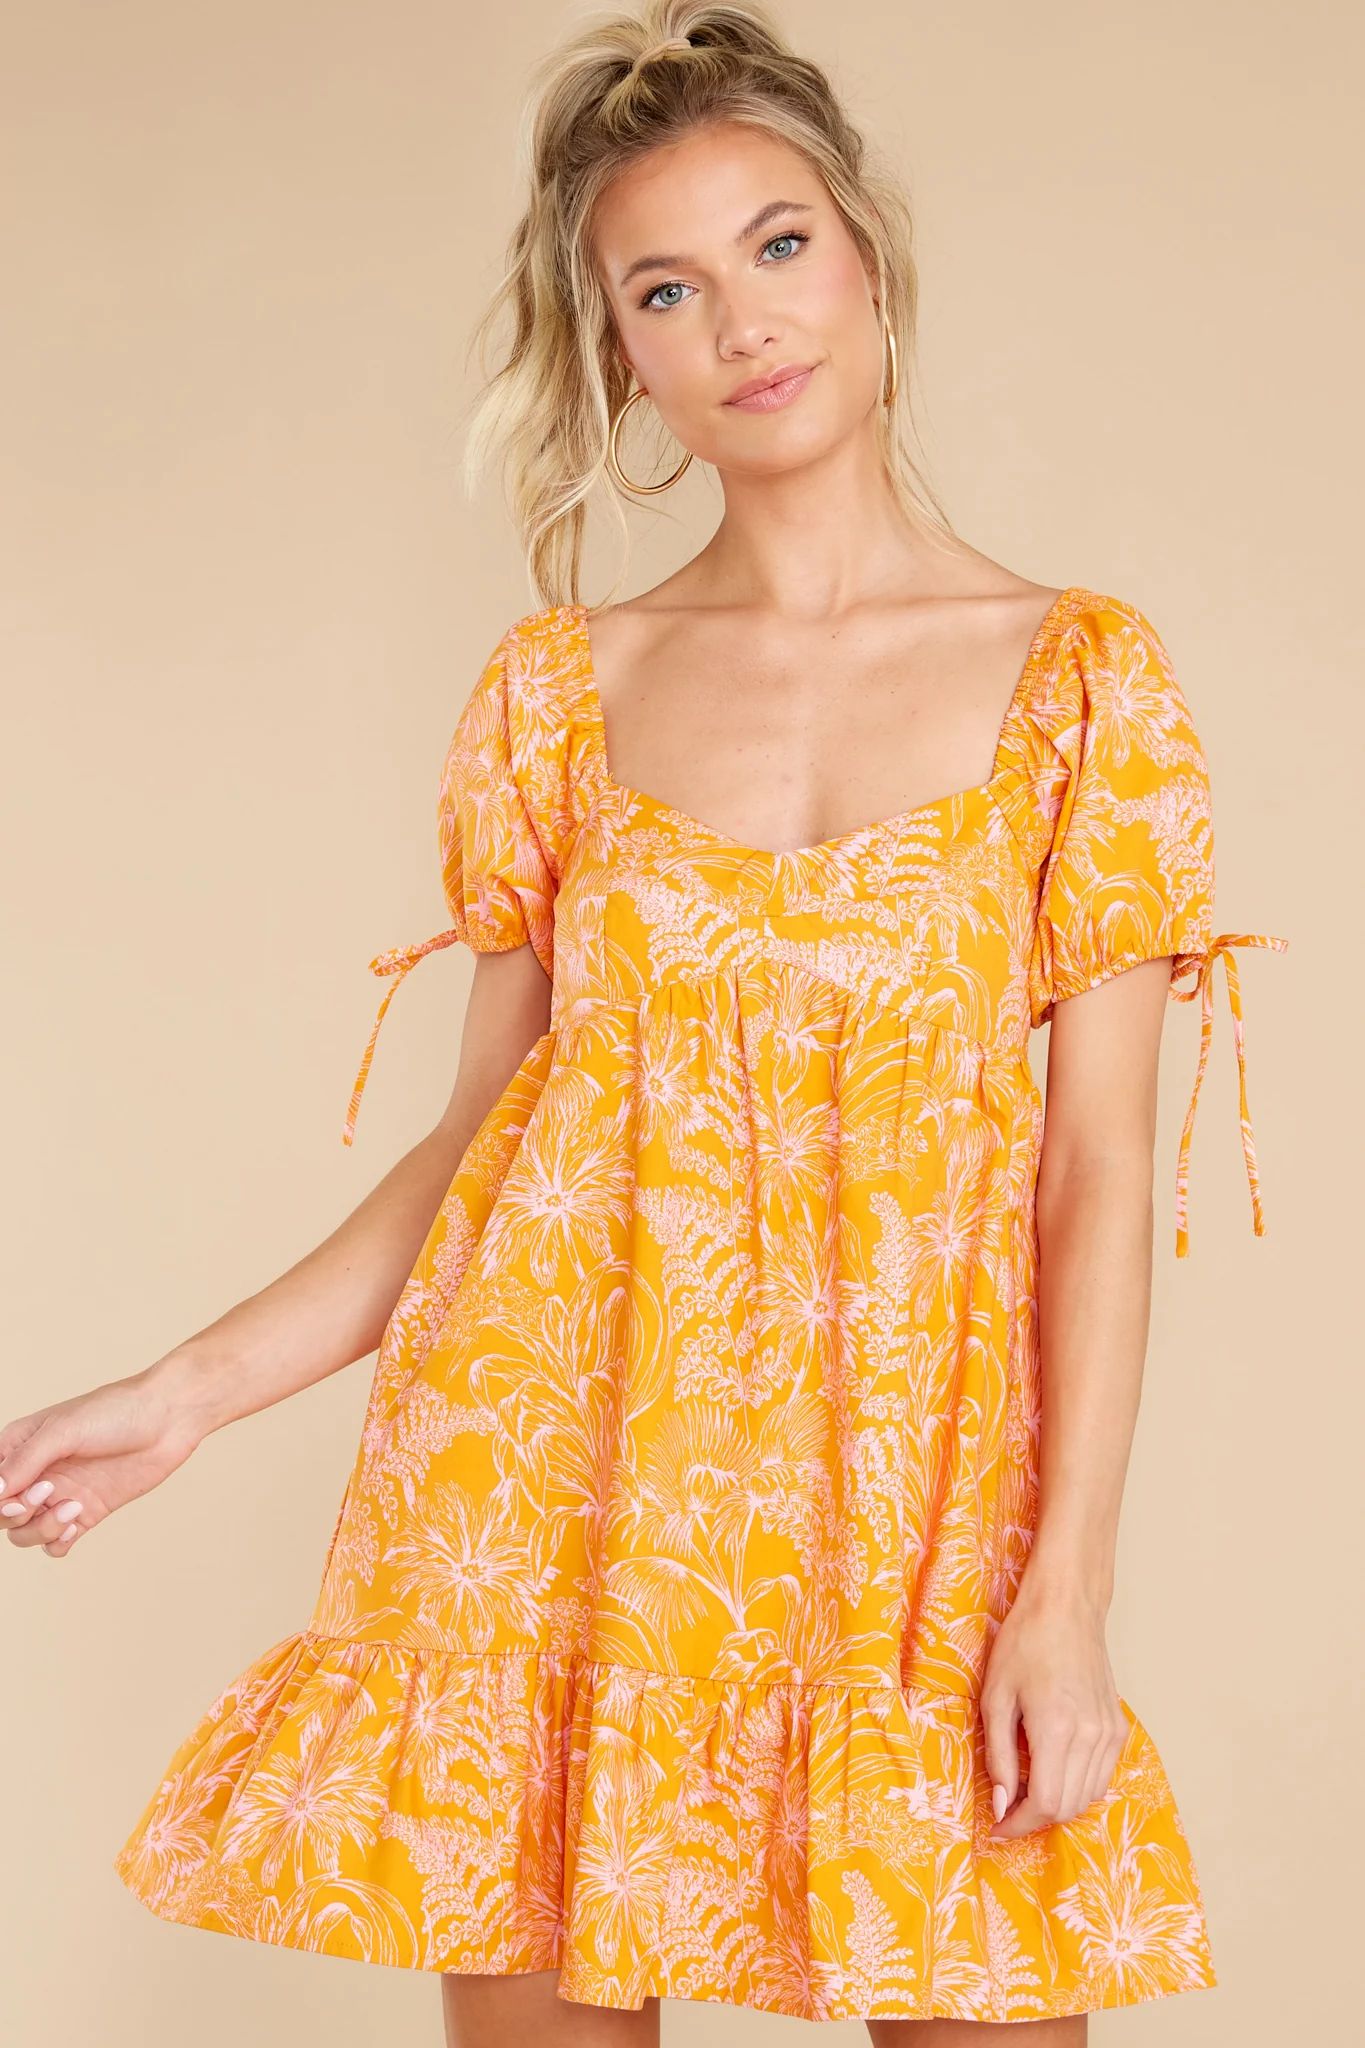 No One Compares Orange Floral Print Dress | Red Dress 